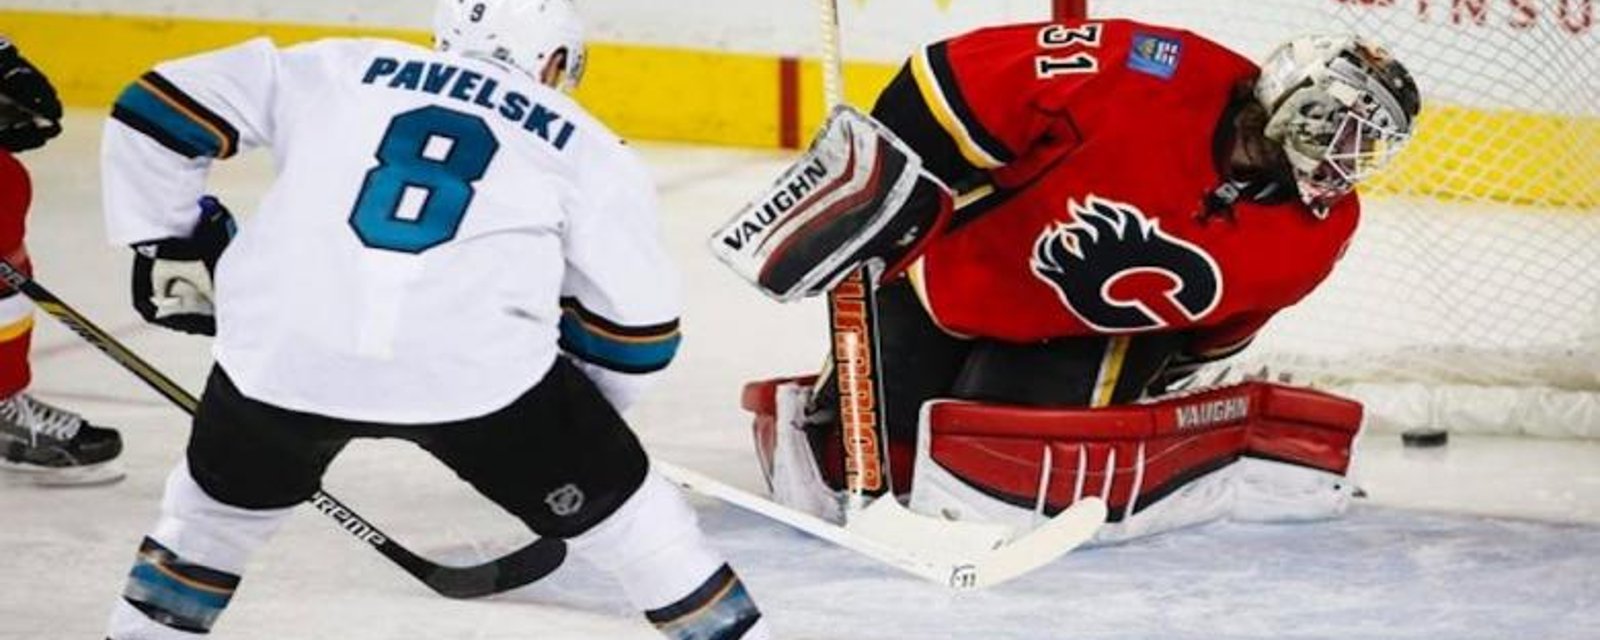 Flames lose high scoring affair against Sharks.